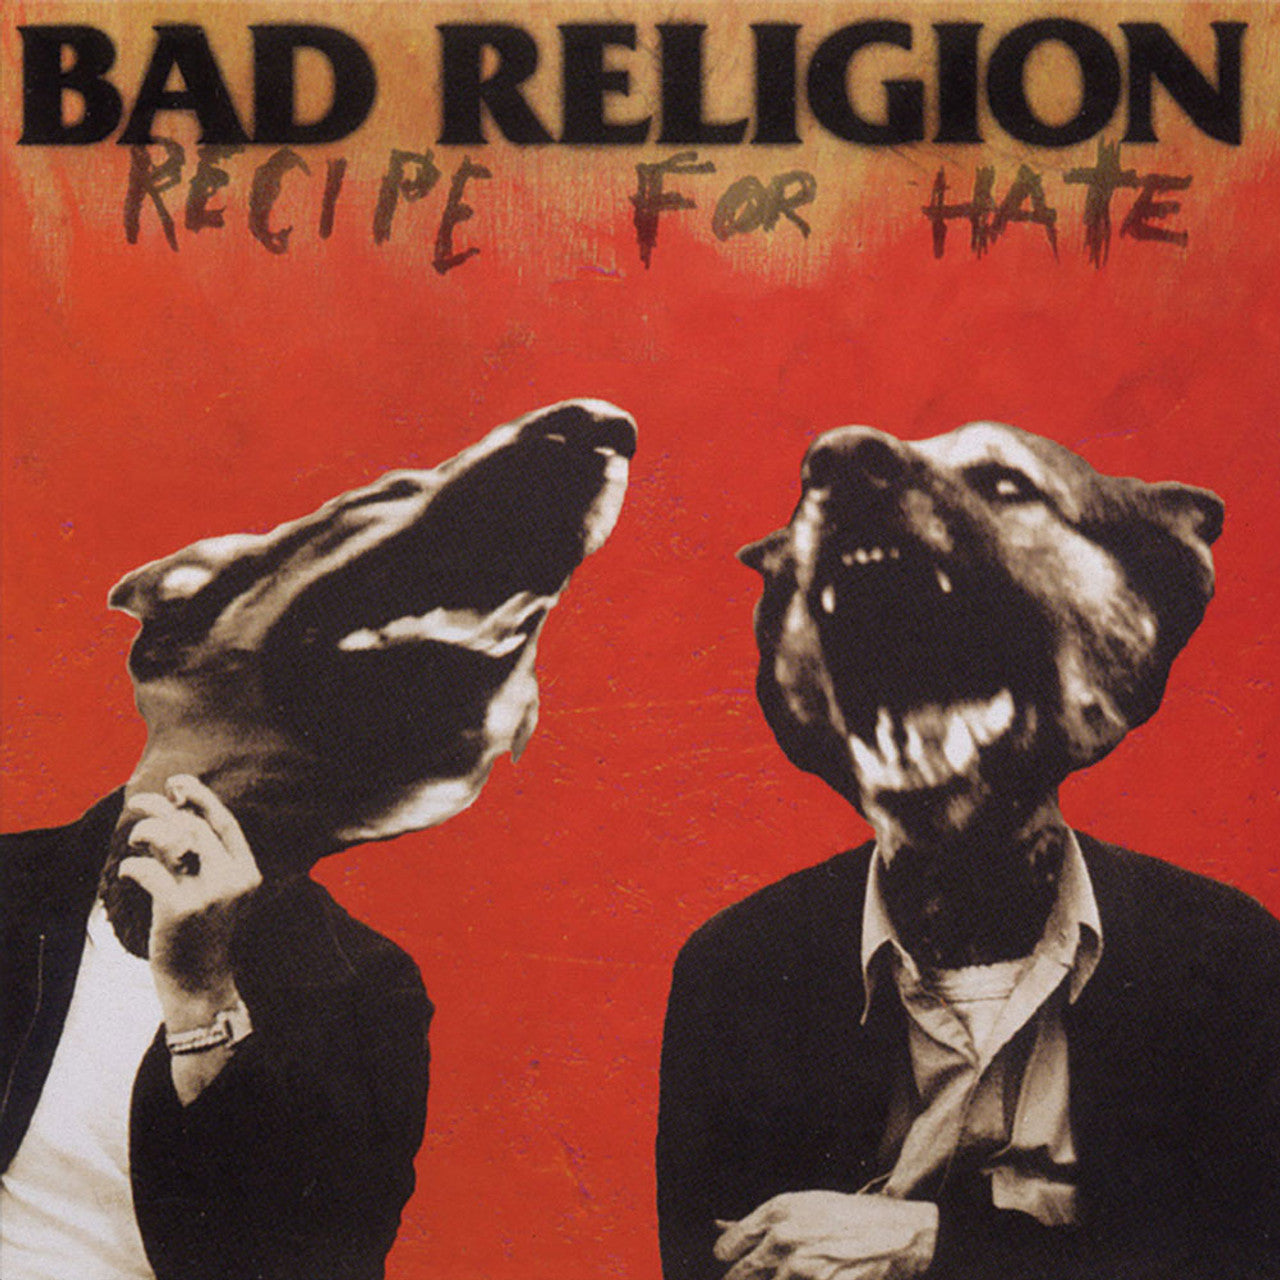 Bad Religion "Recipe for Hate" 30th Anniversary Edition 12" Vinyl